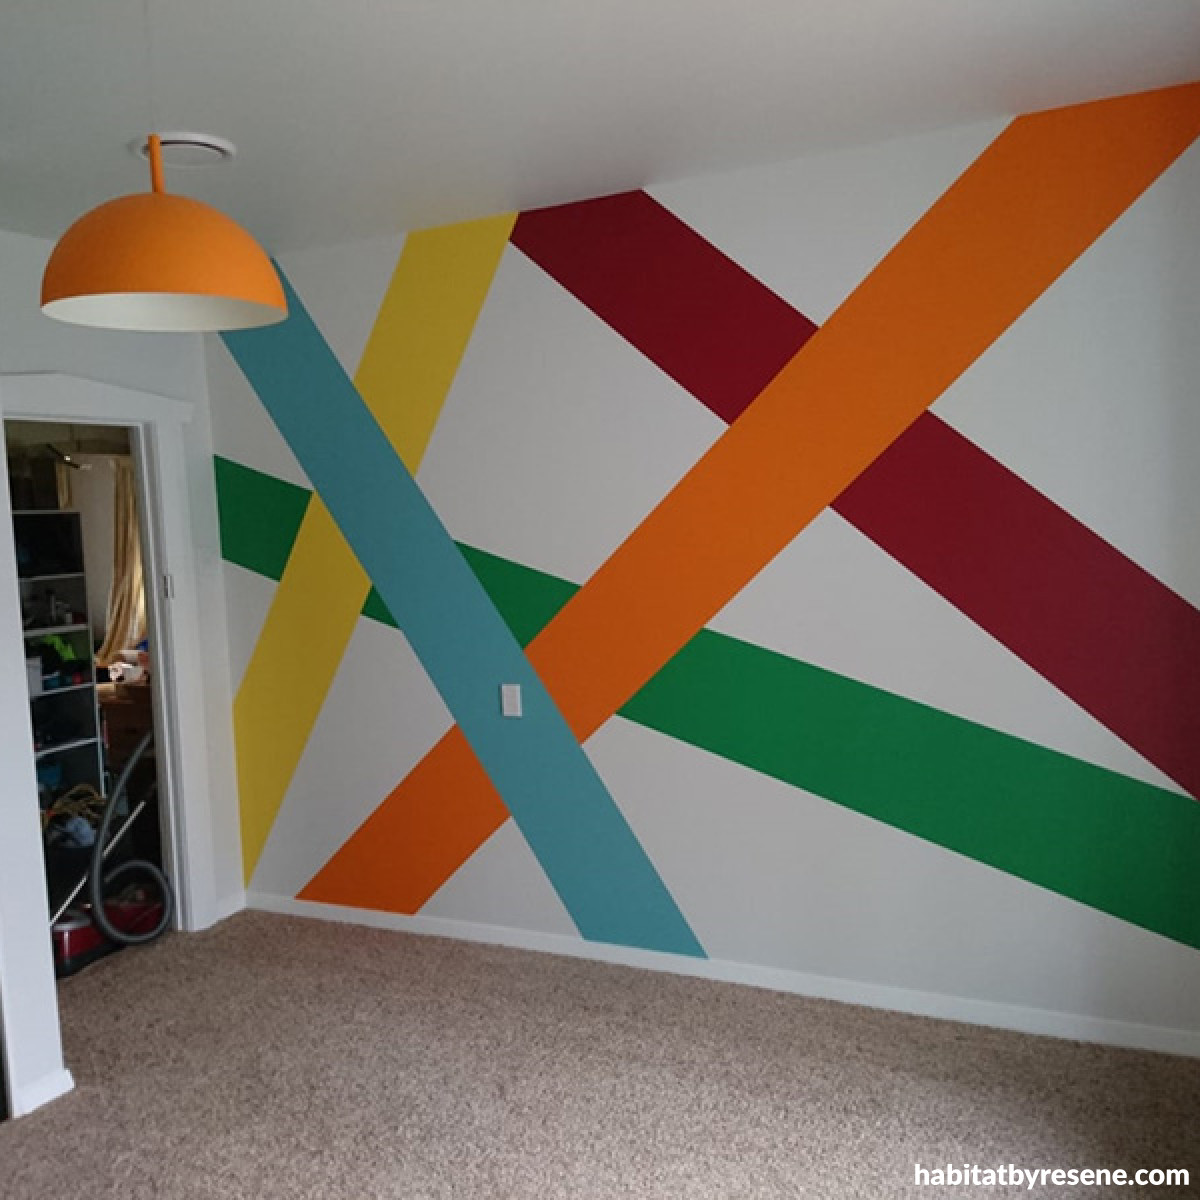 Aron Taaffe creates colourful mural in son’s bedroom | Habitat by Resene